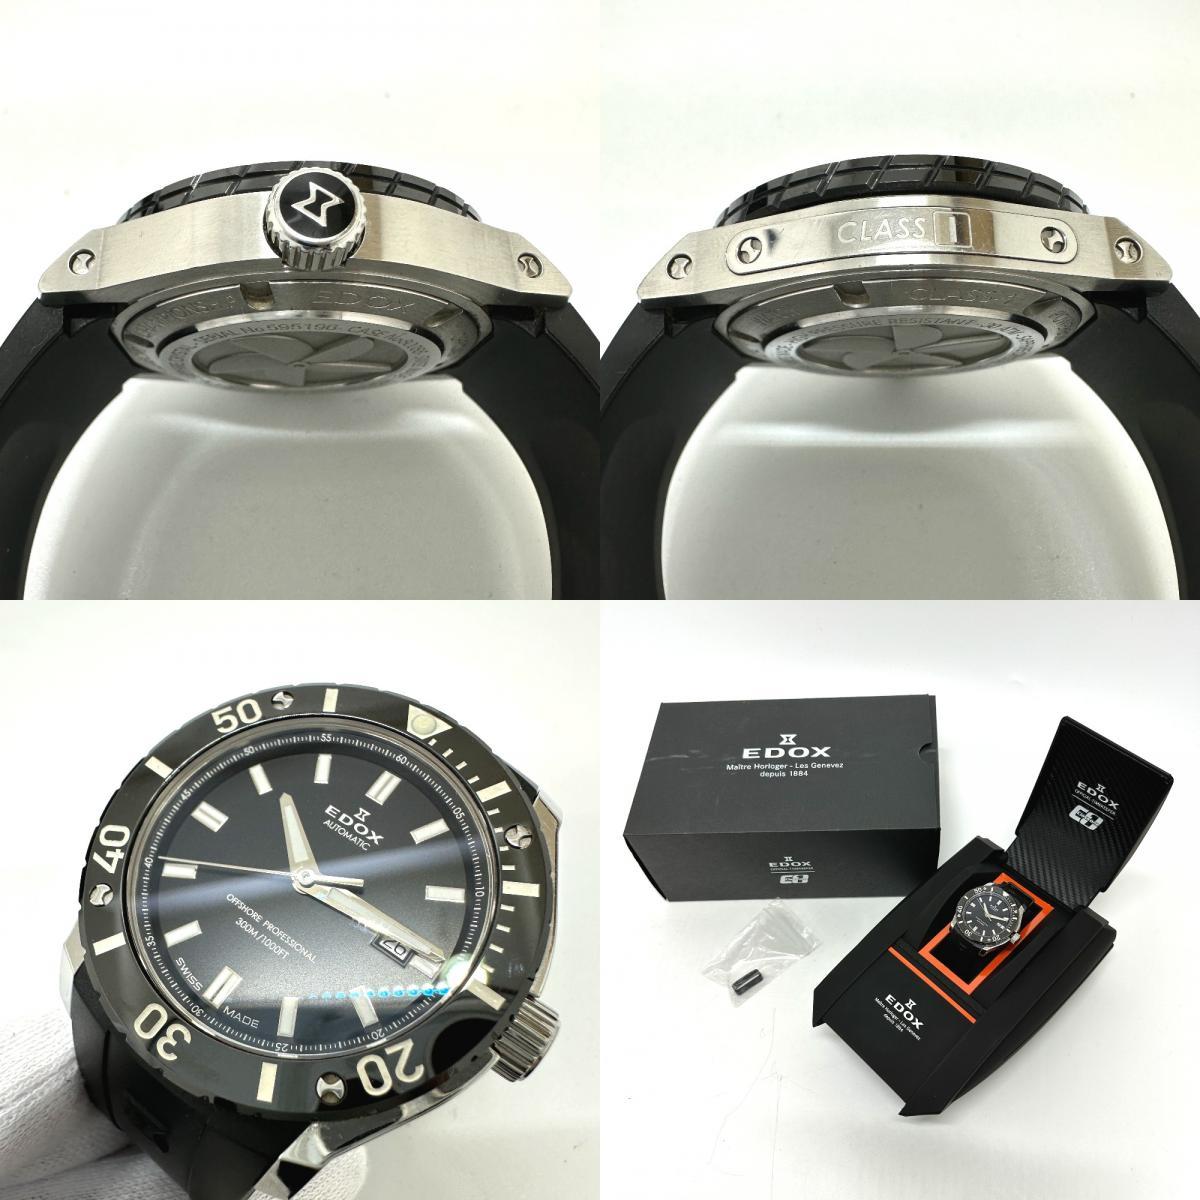 EDOX Ed ks80088 offshore Professional самозаводящиеся часы Date Class one наручные часы серебряный мужской [ б/у ]